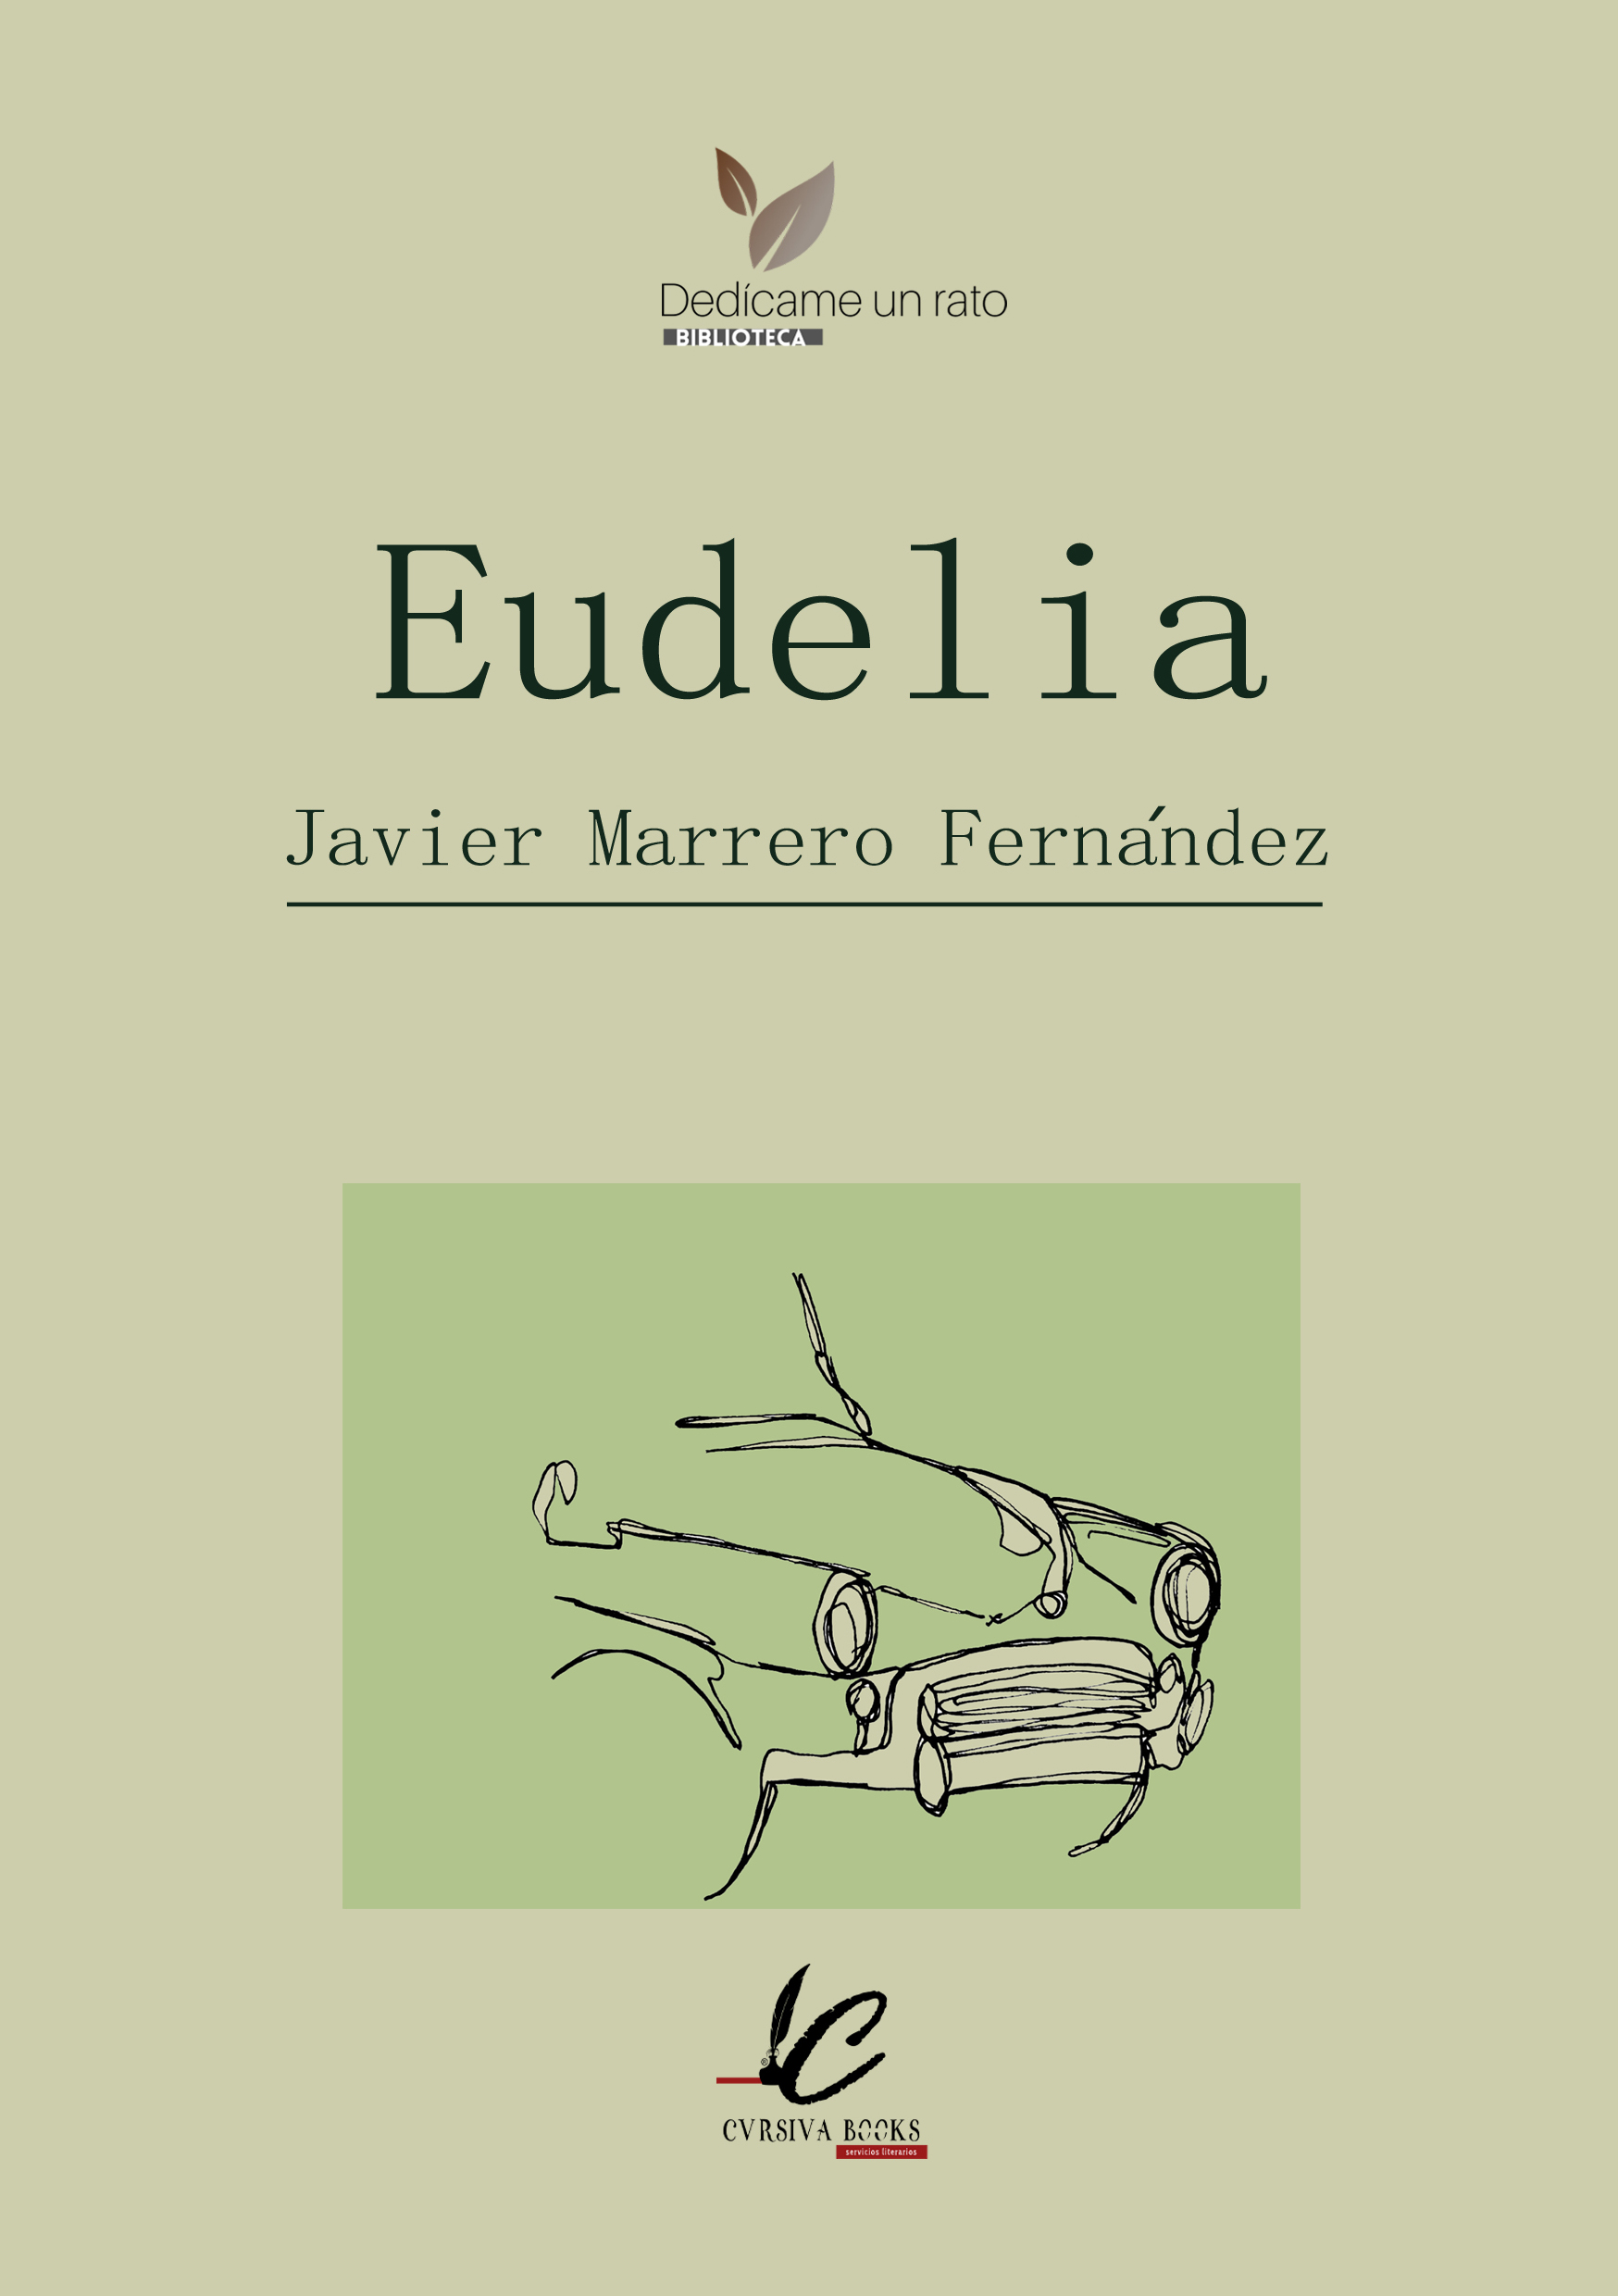 Eudelia